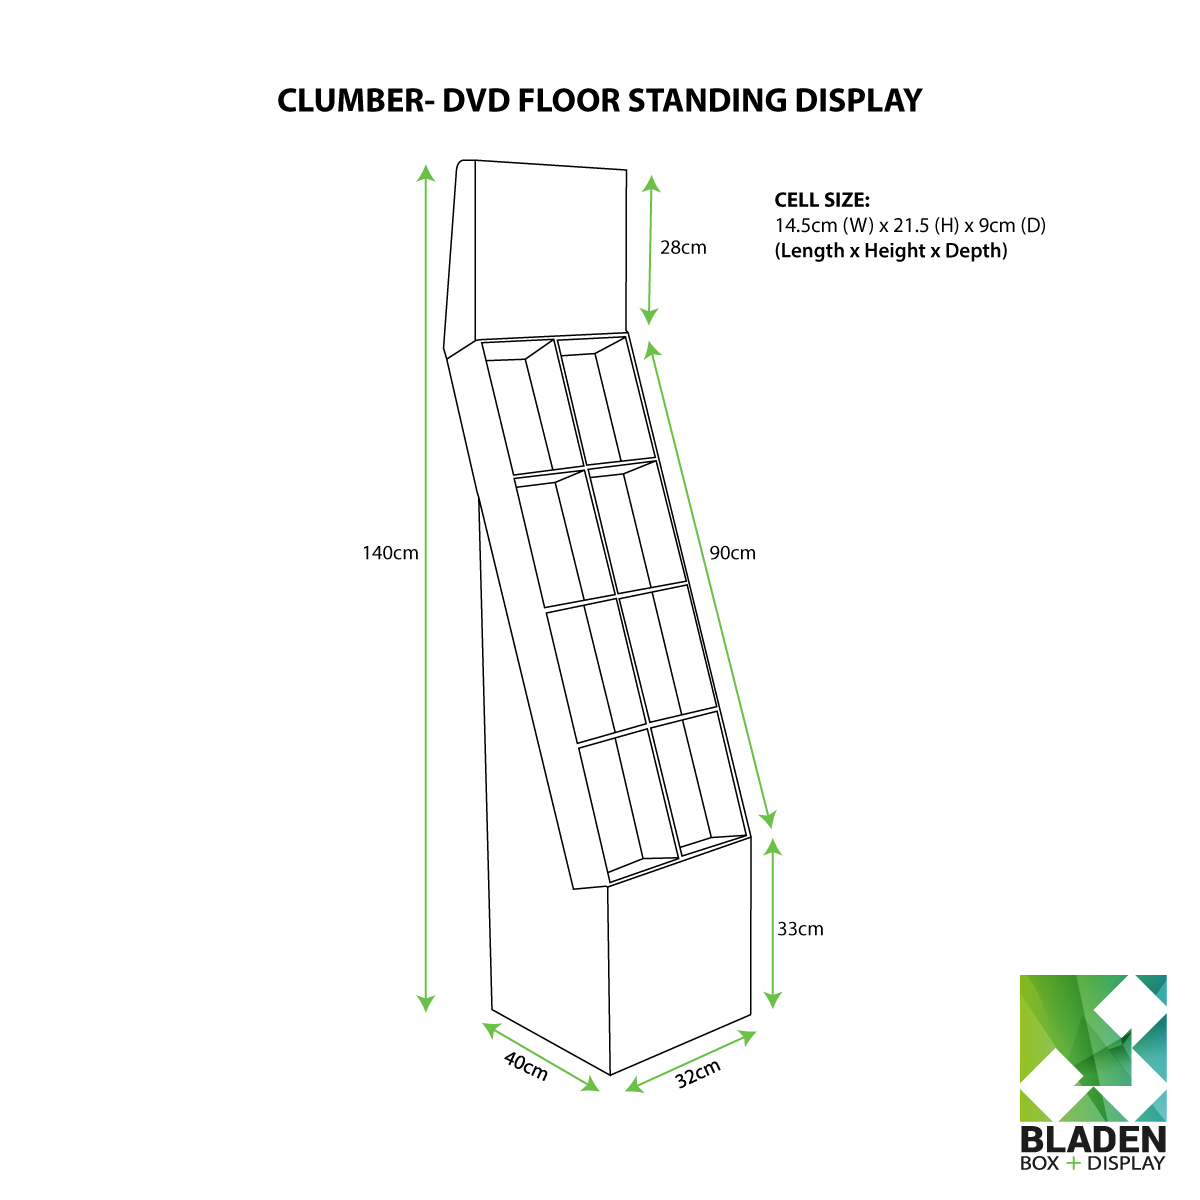 Floor Standing Display - Clumber DVD Line Drawing